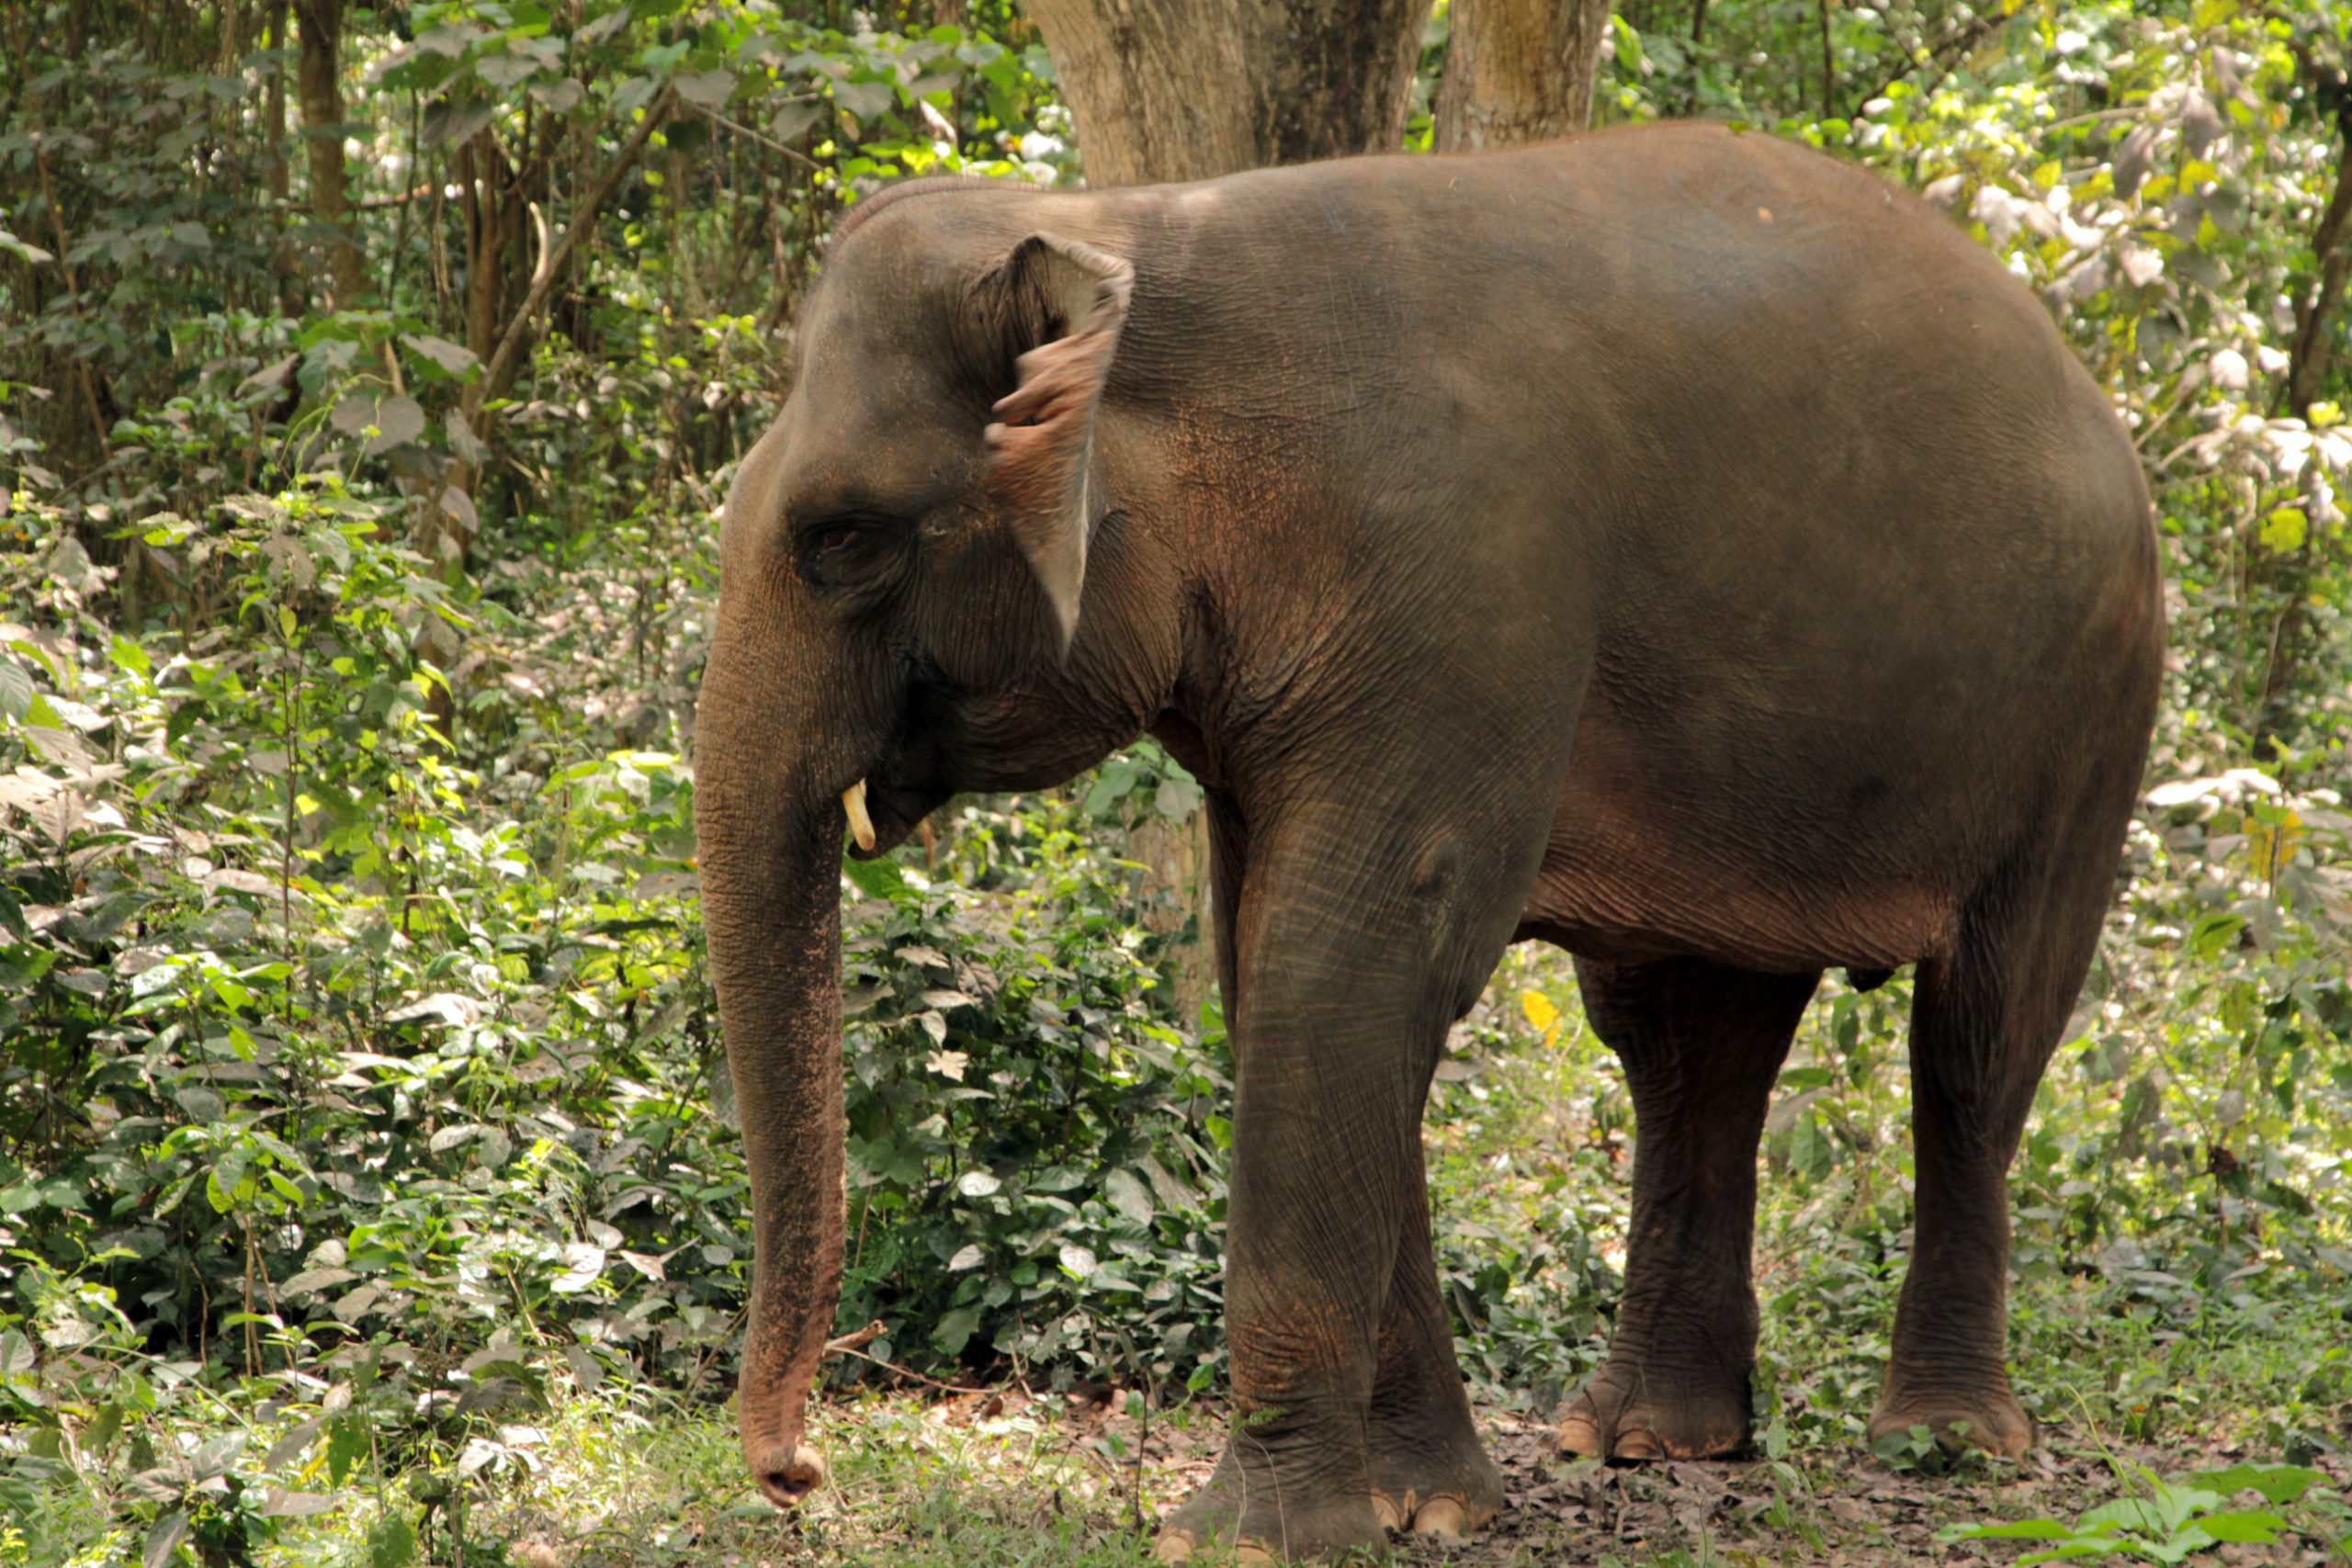 The Sumatran Elephants